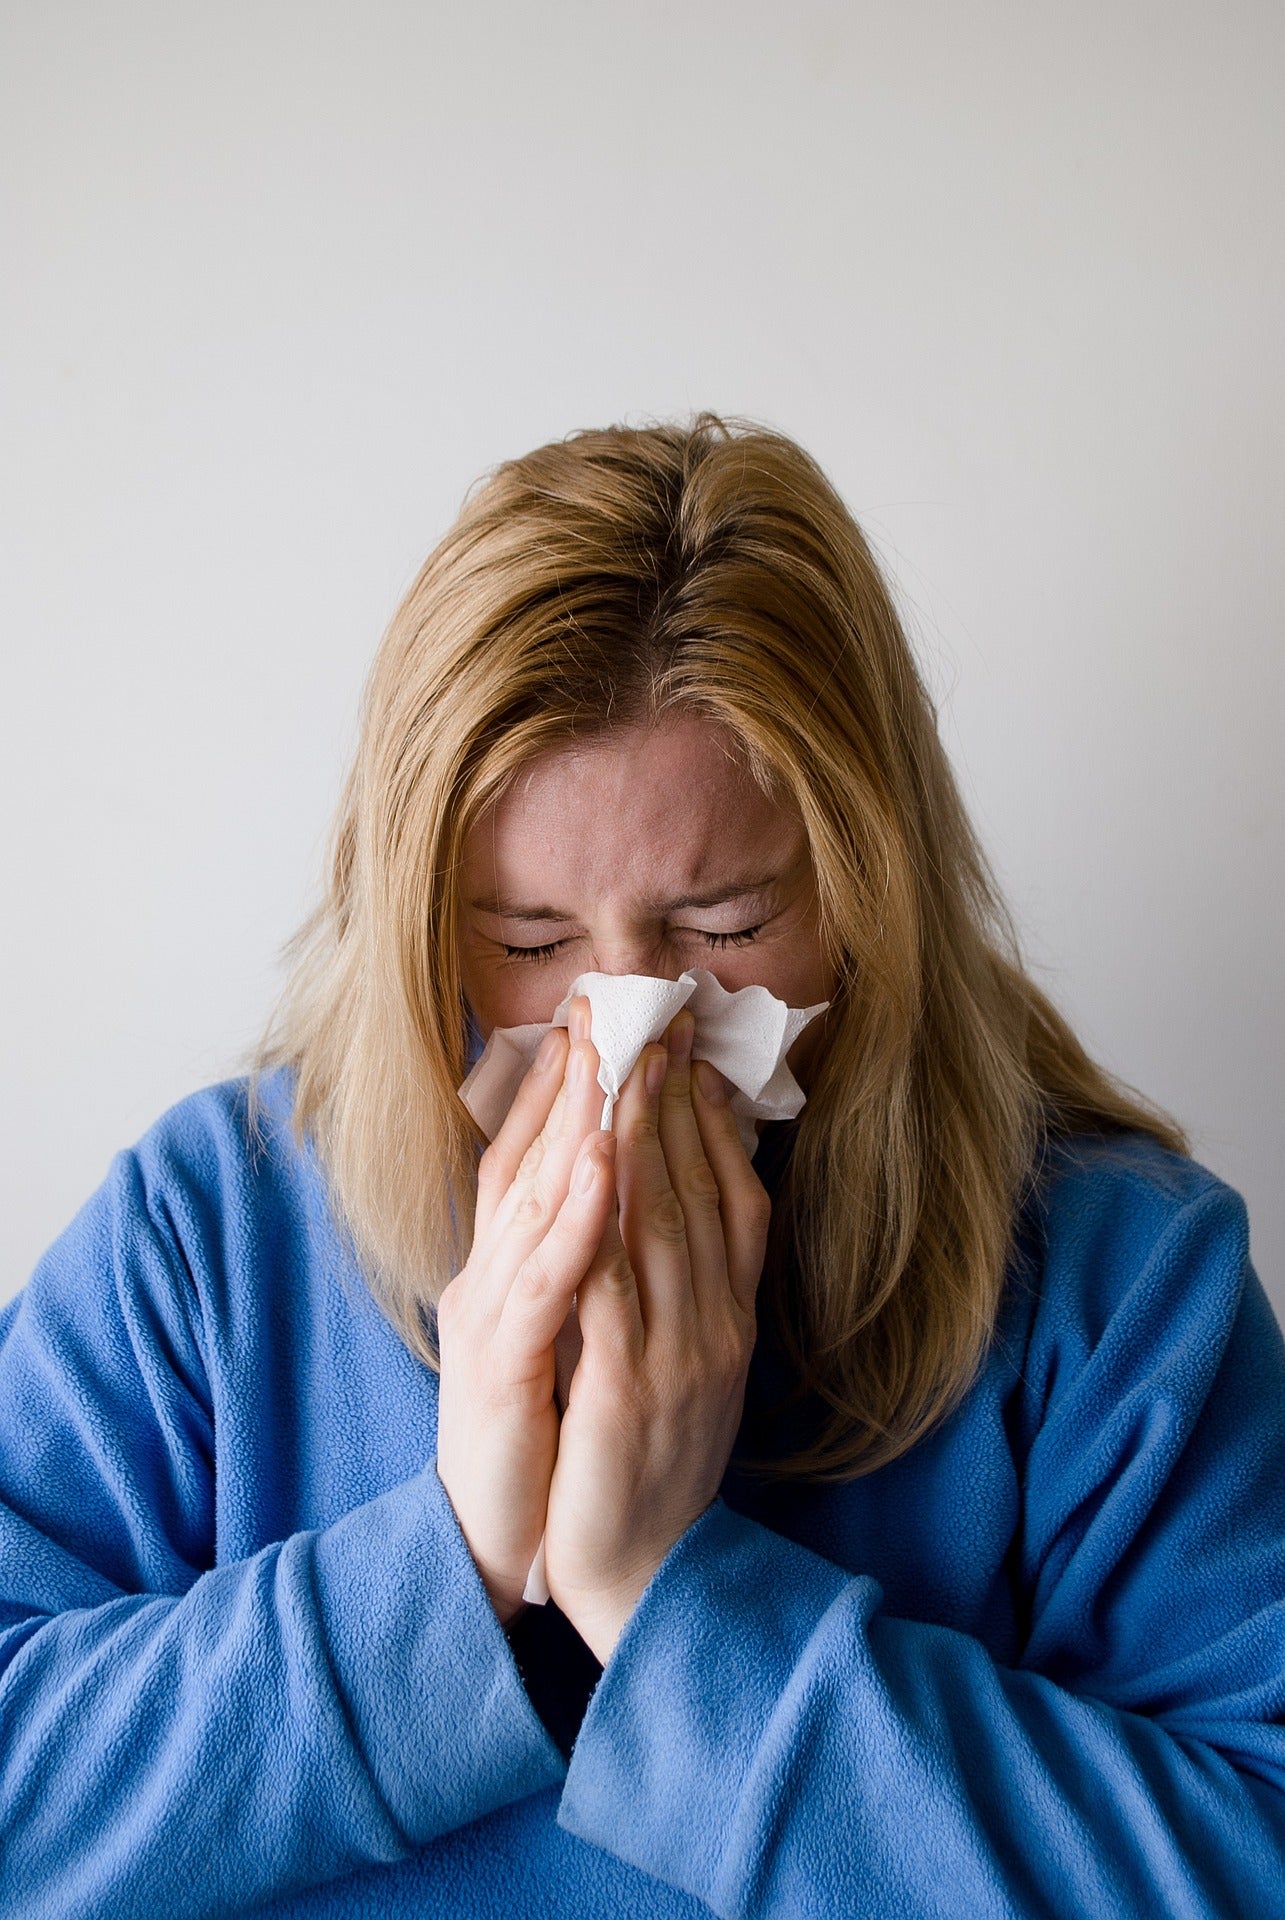 5 Natural Flu Remedies That Work Fast